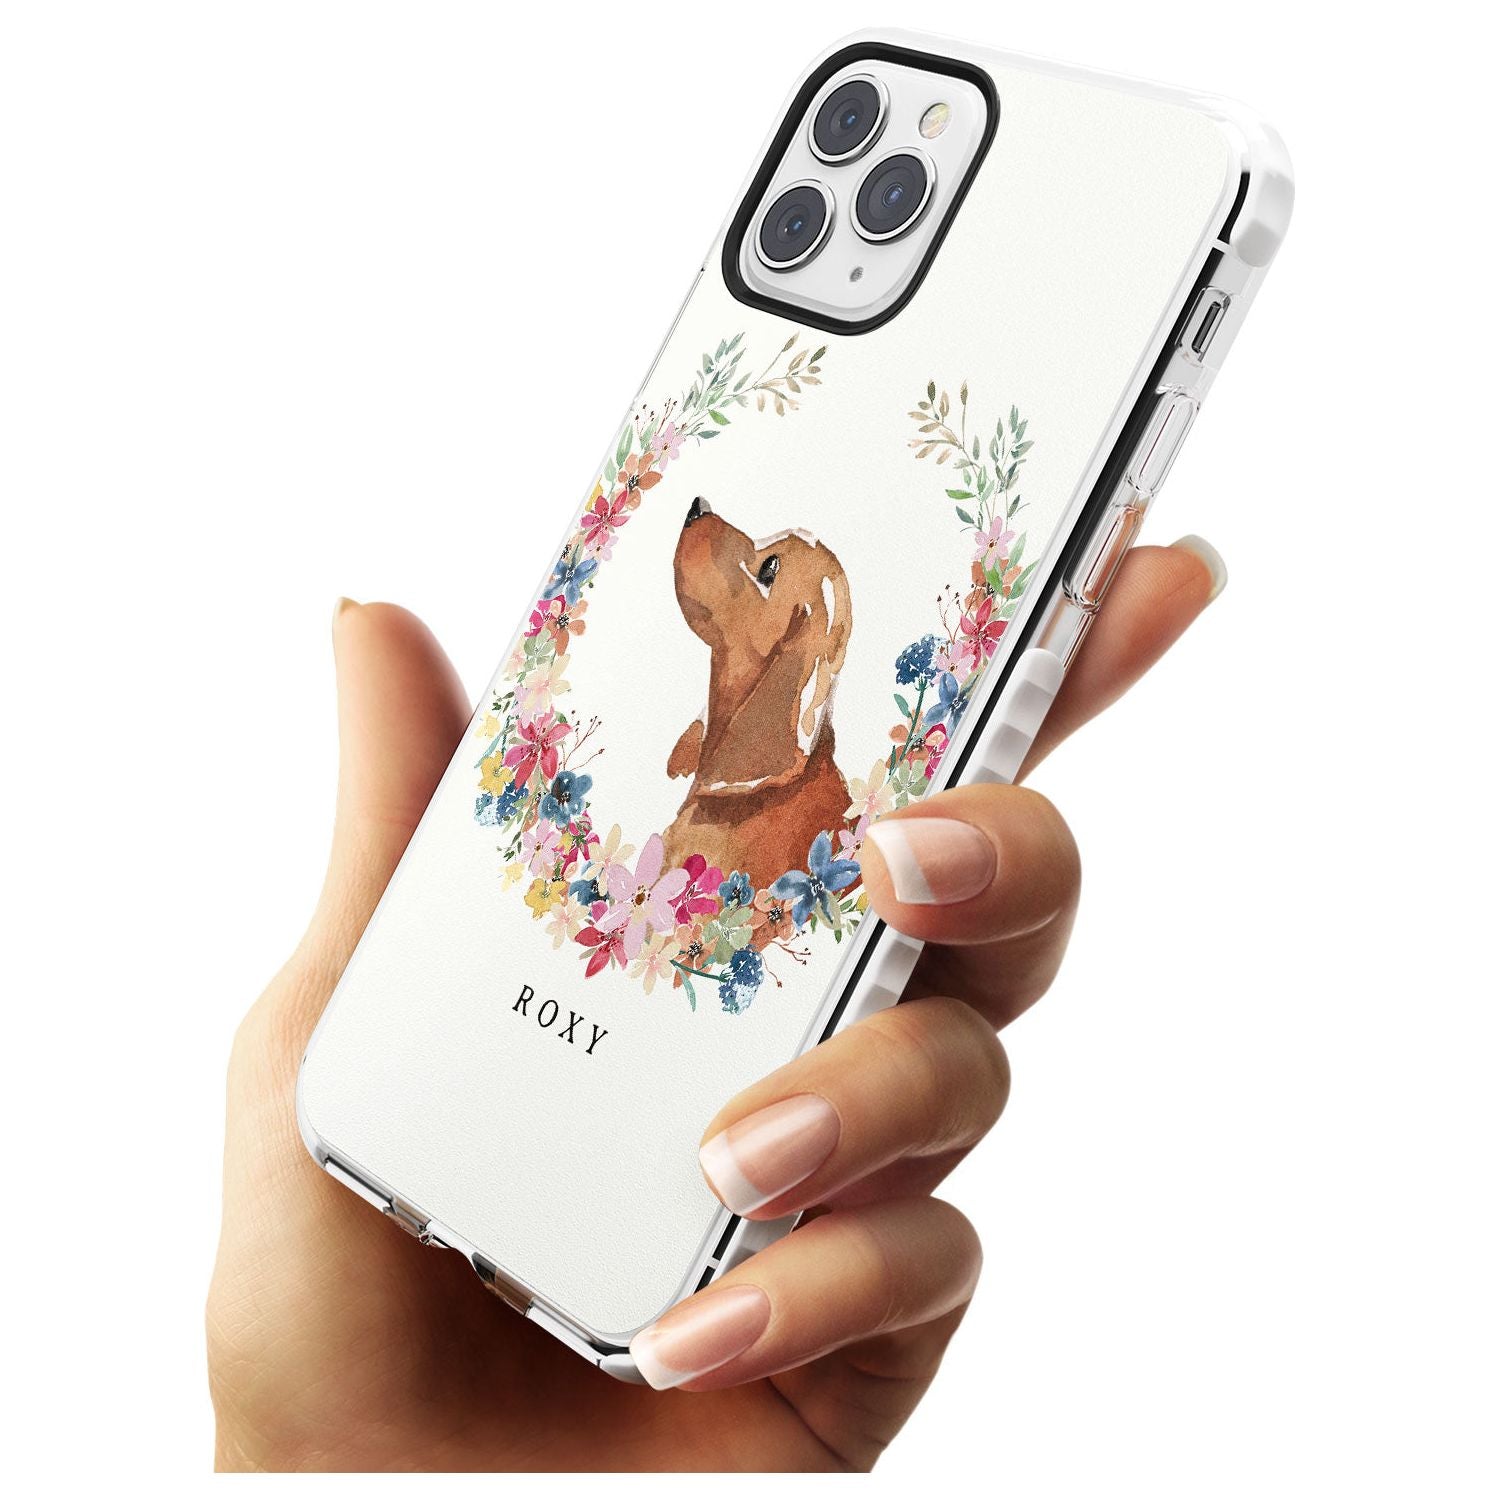 Tan Dachshund - Watercolour Dog Portrait Impact Phone Case for iPhone 11 Pro Max